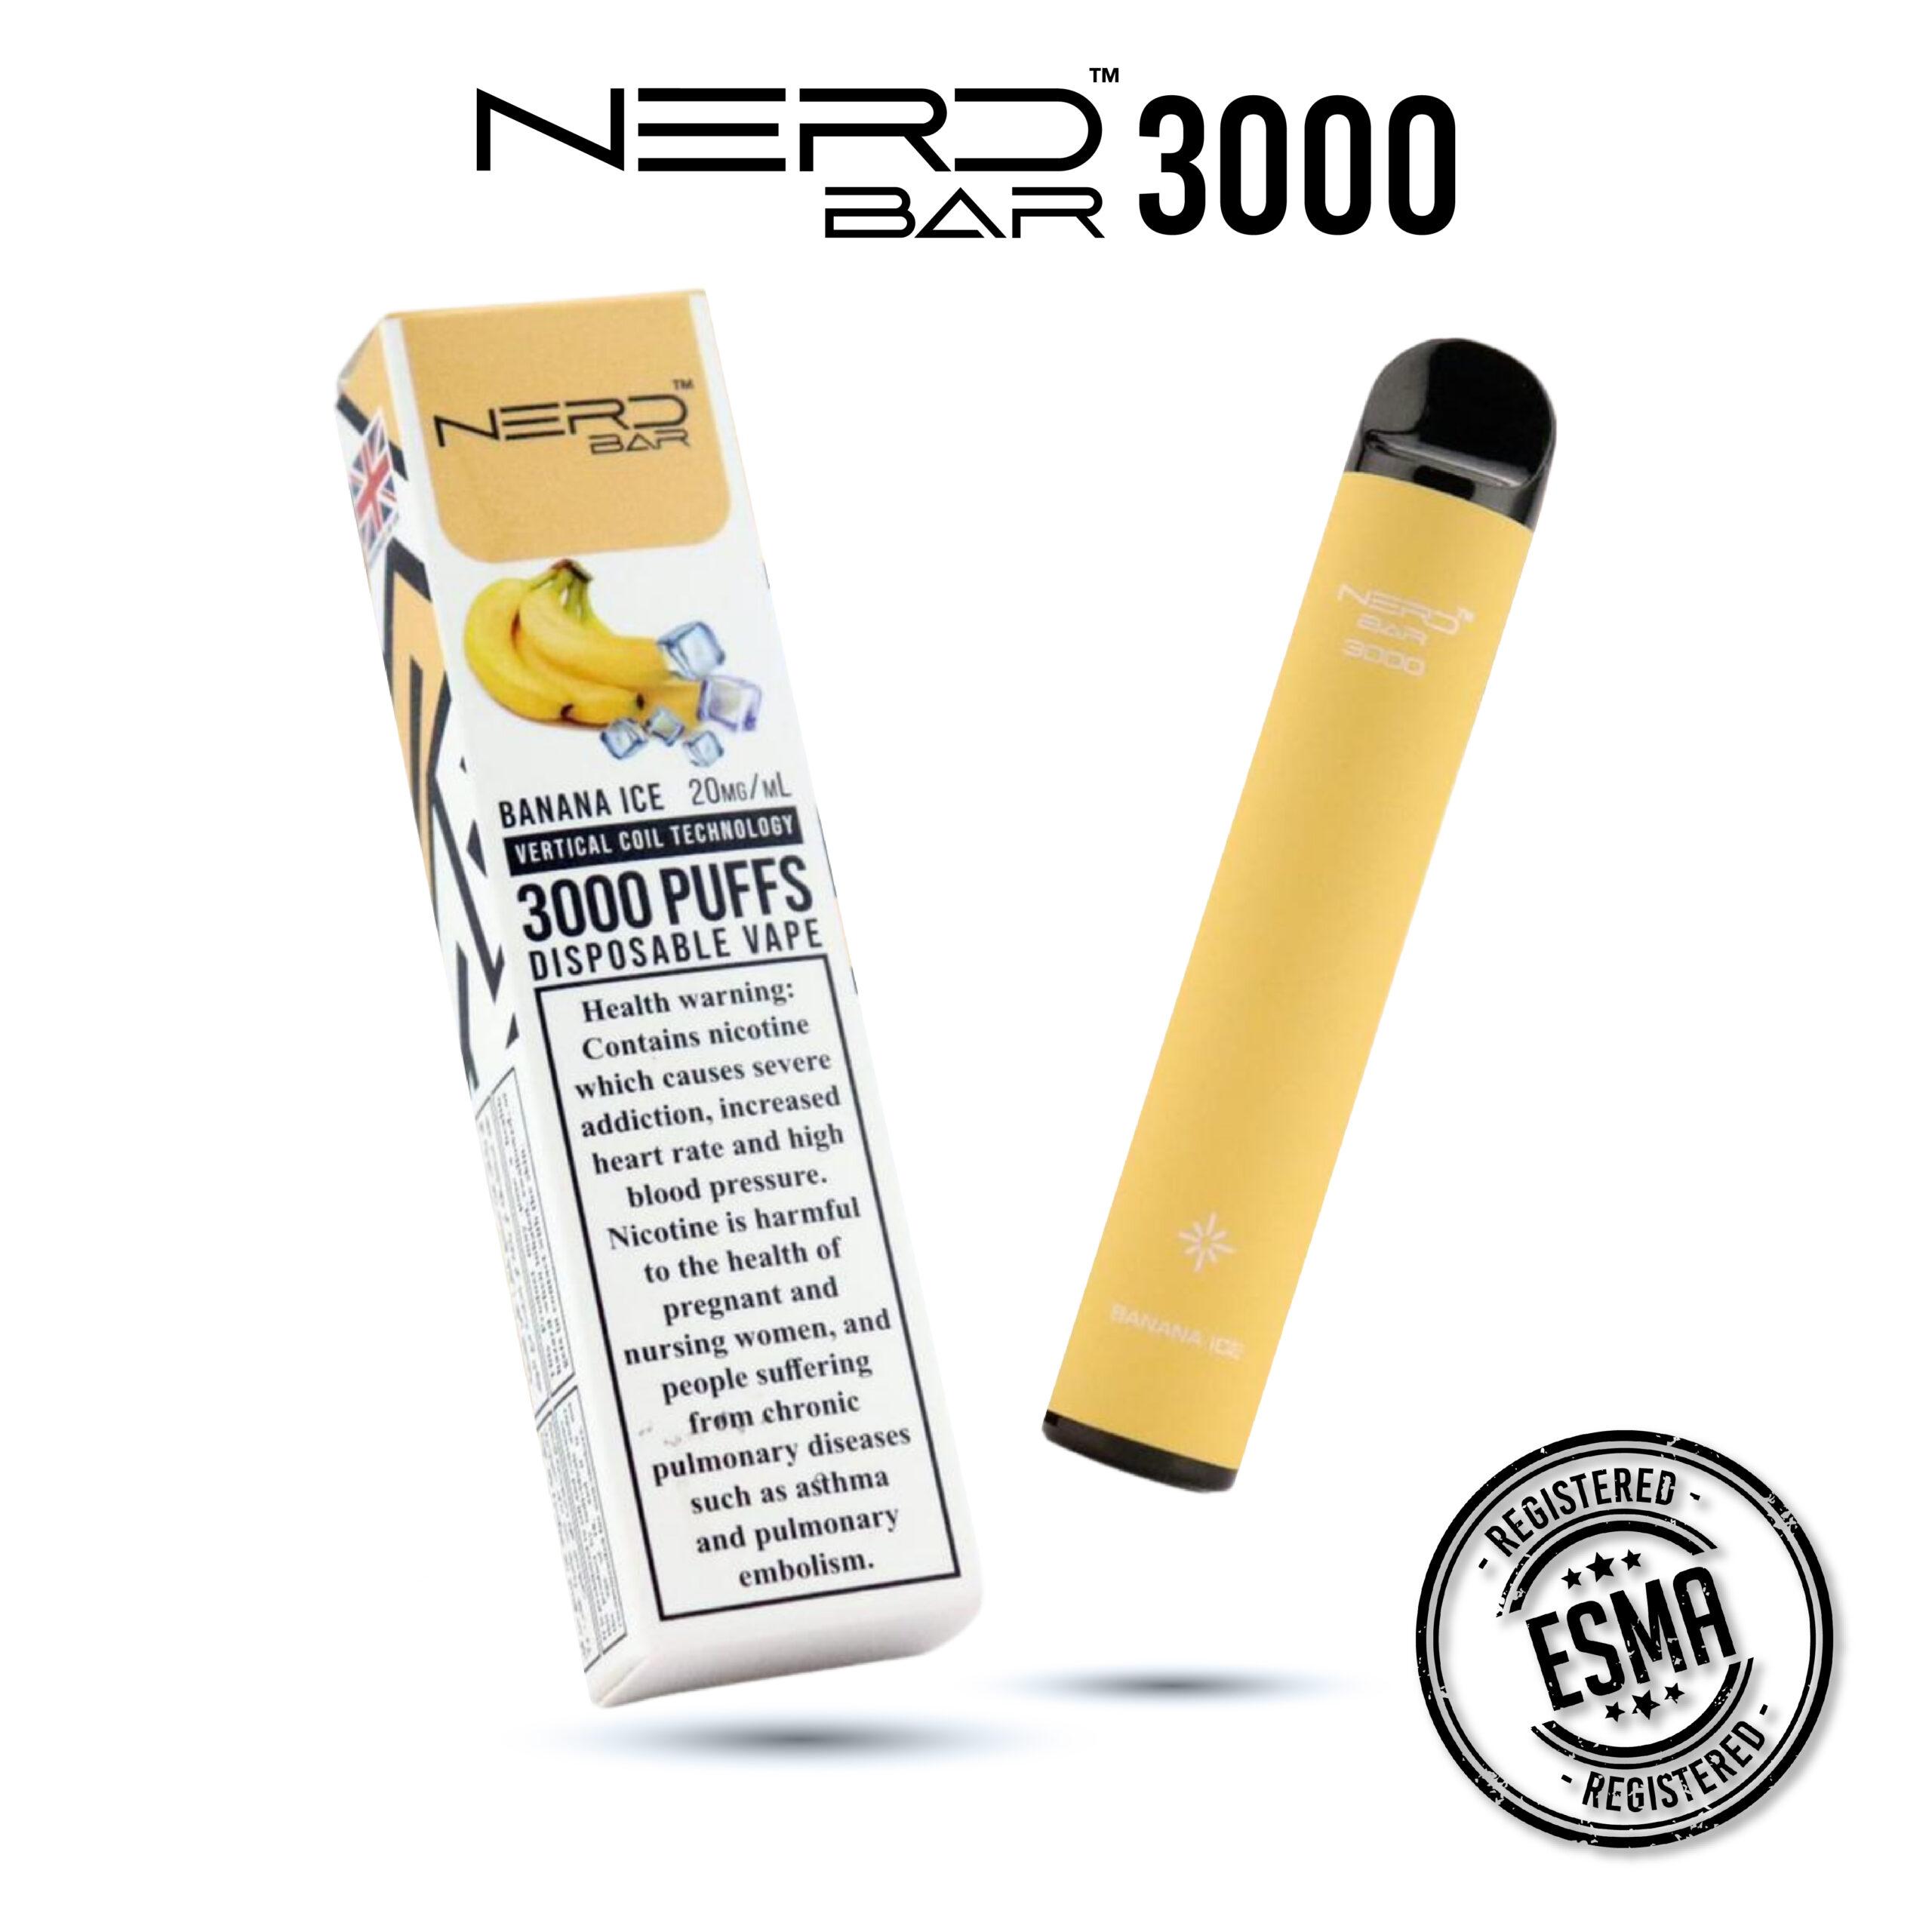 NERD Bar 3000 Banana ice 20mg - Vape Vibes